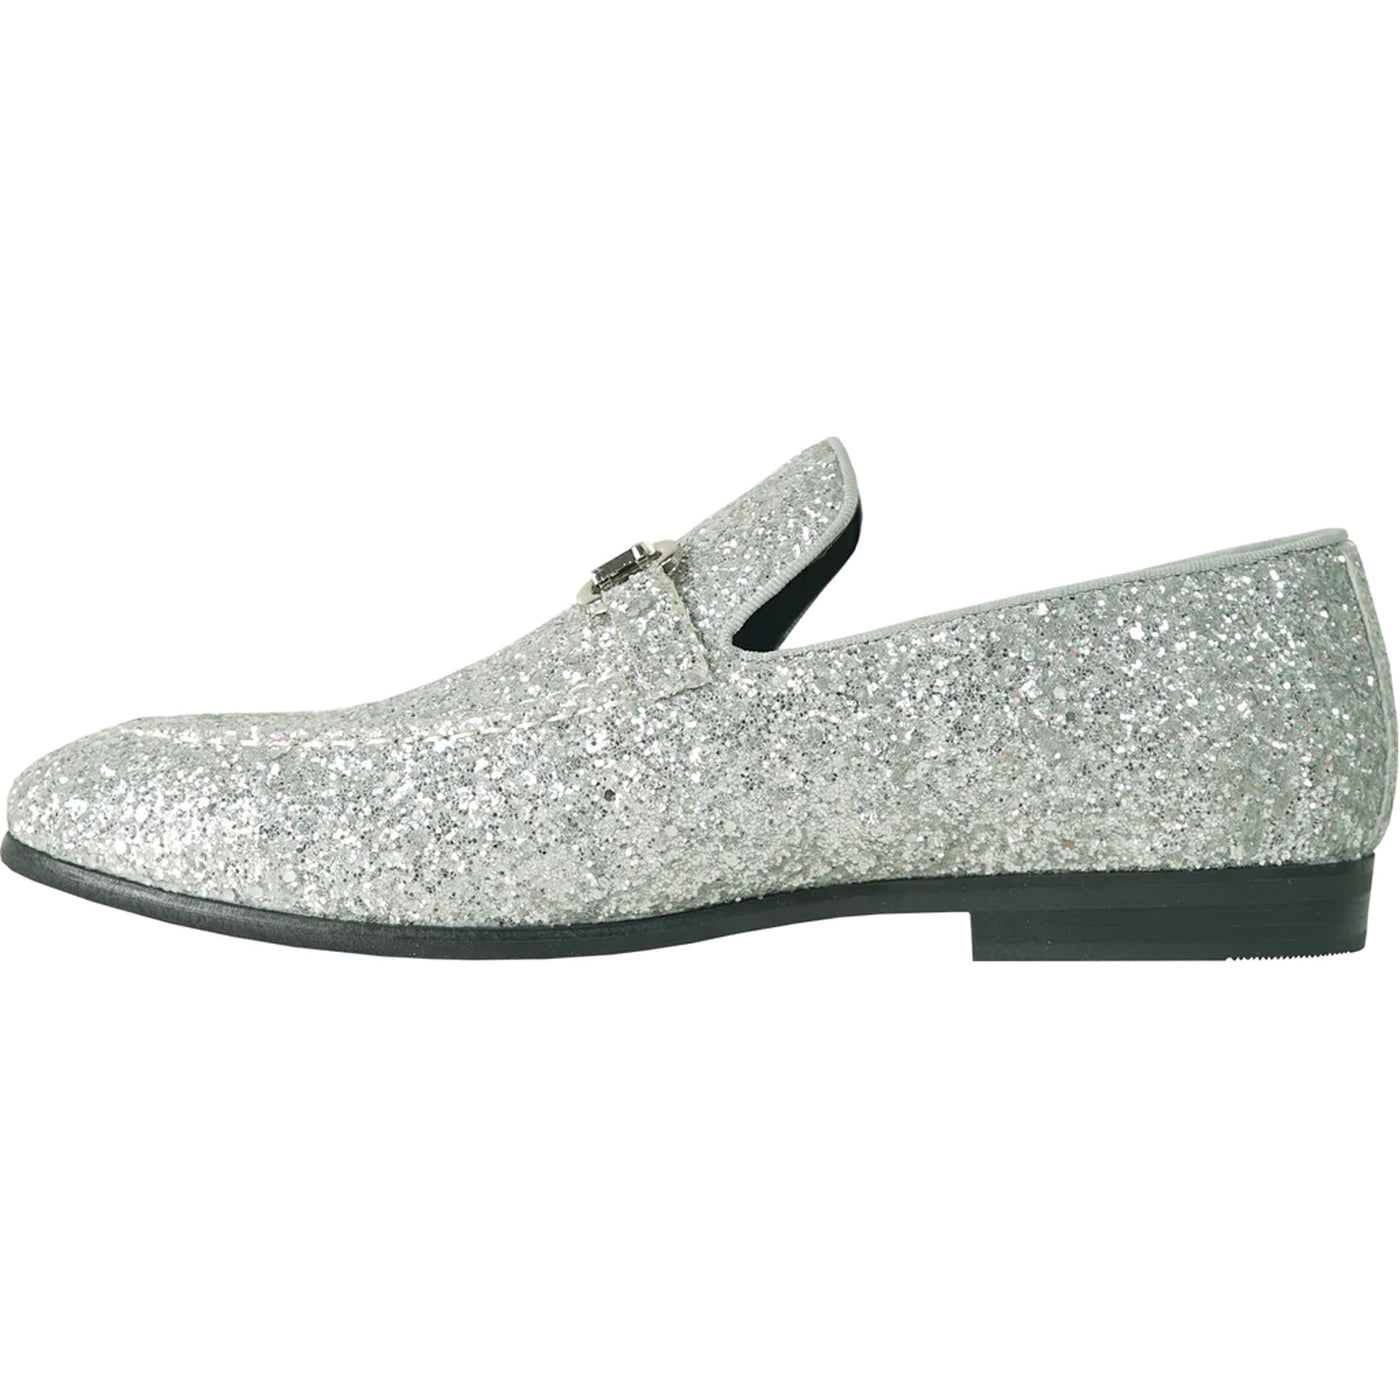 Mens Modern Glitter Sequin Prom Tuxedo Buckle Loafer in Silver Grey